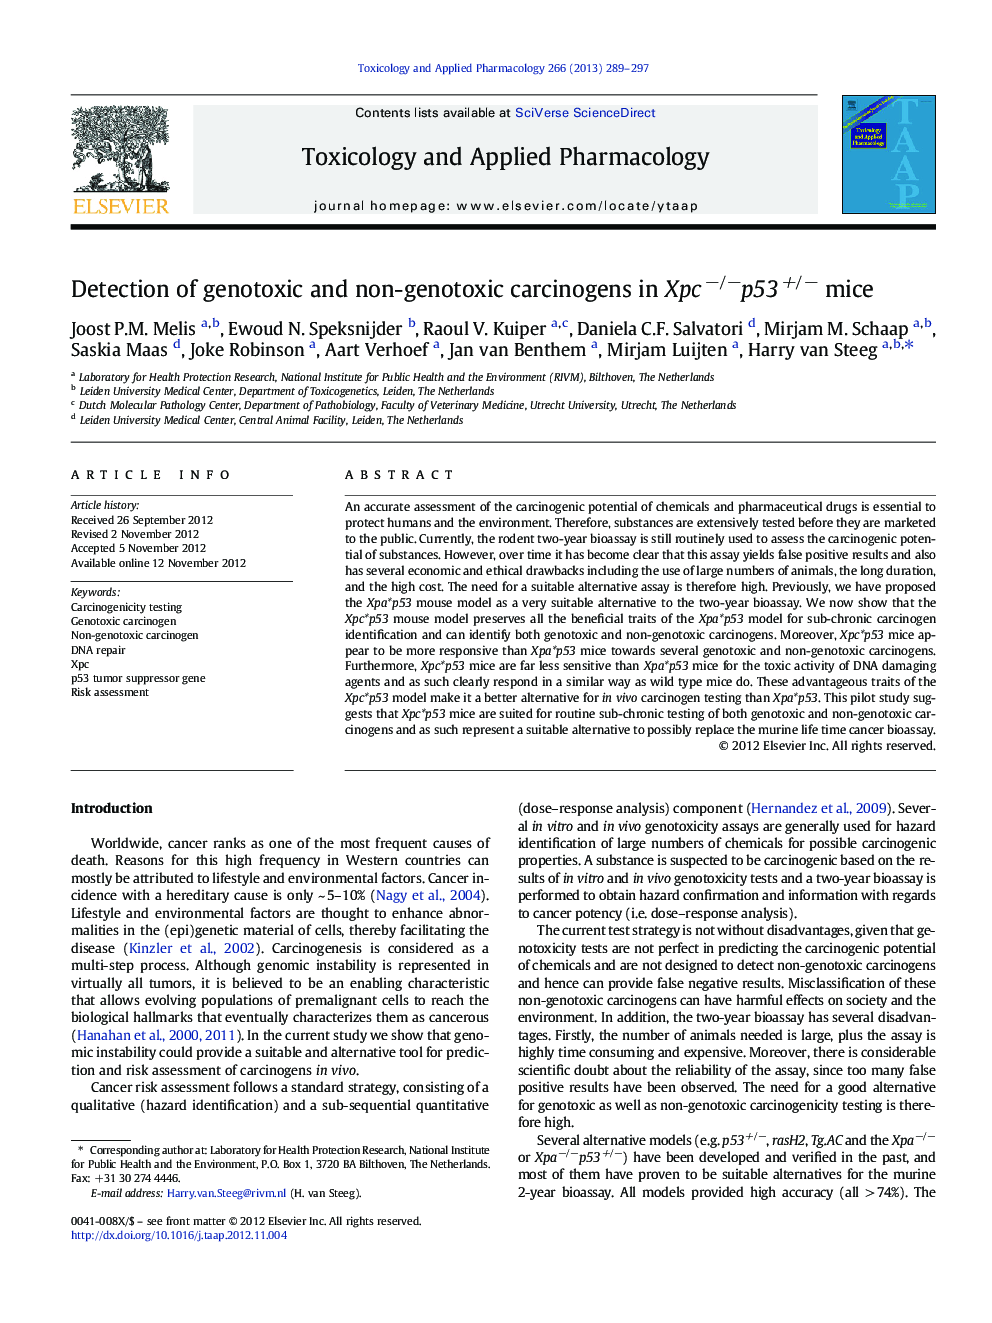 Detection of genotoxic and non-genotoxic carcinogens in Xpc−/−p53+/− mice